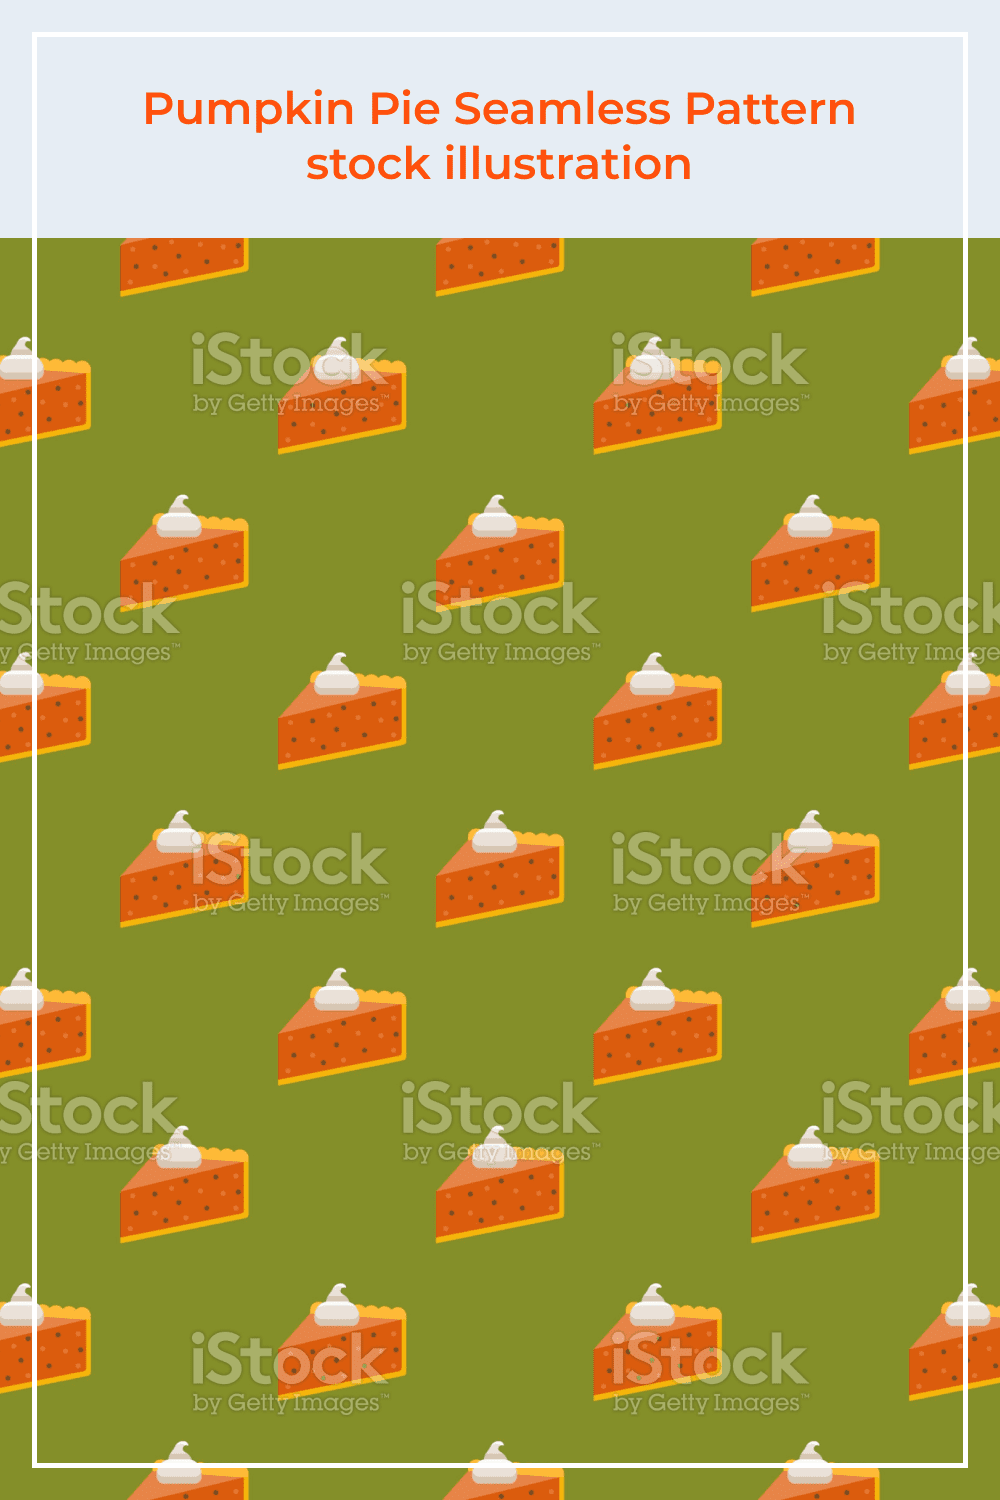 Pumpkin pie seamless pattern stock illustration.